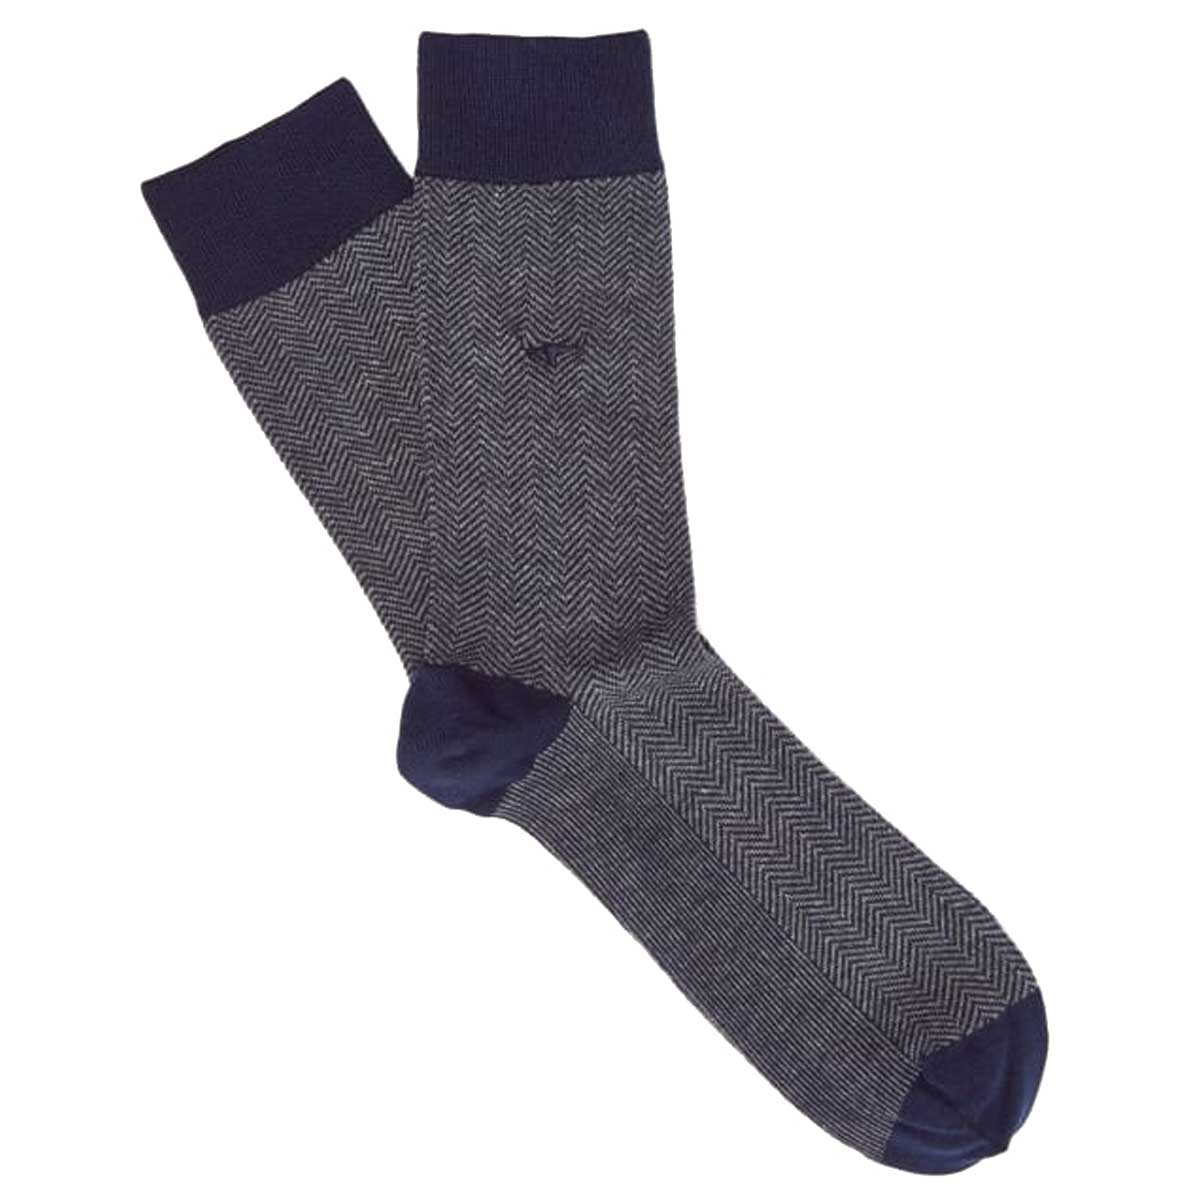 RM WiLLIAMS Nelson Men's Cotton Socks - Grey & Navy